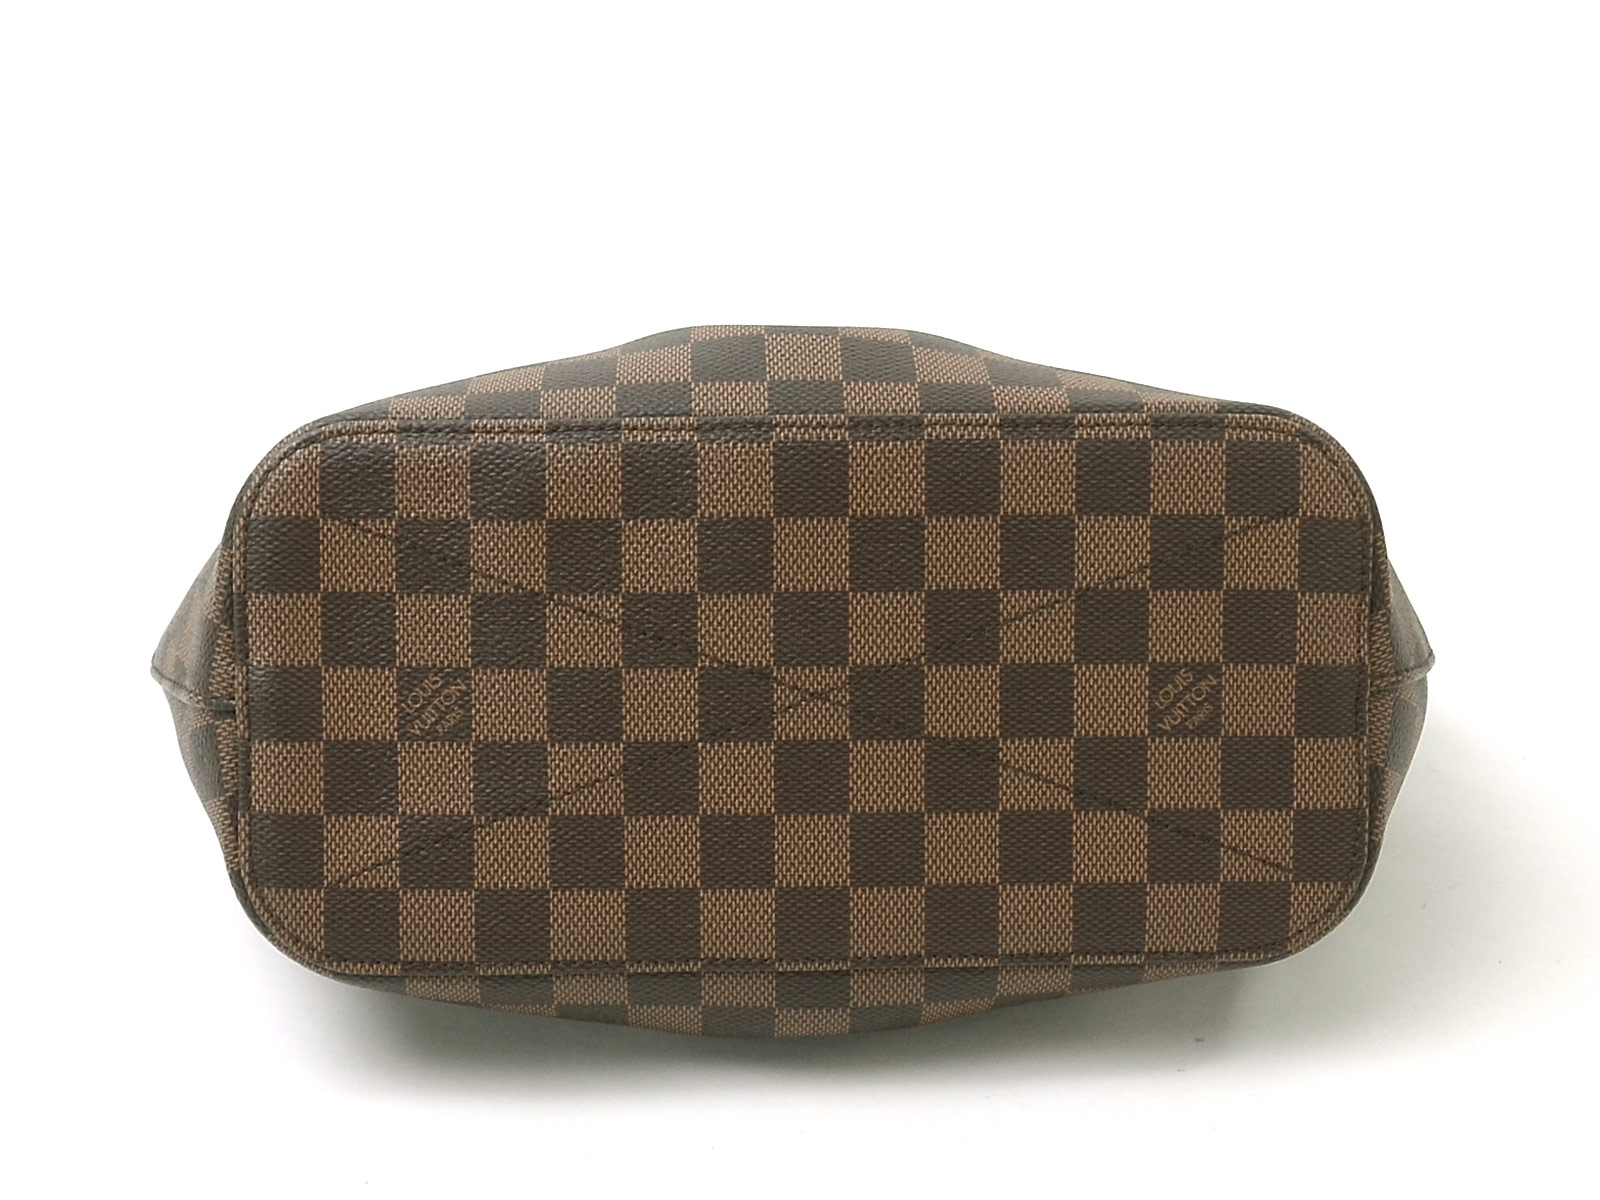 Auth Louis Vuitton Damier Ebene Siena PM 2-Way Handbag Shoulder Bag N41545 93912 | eBay